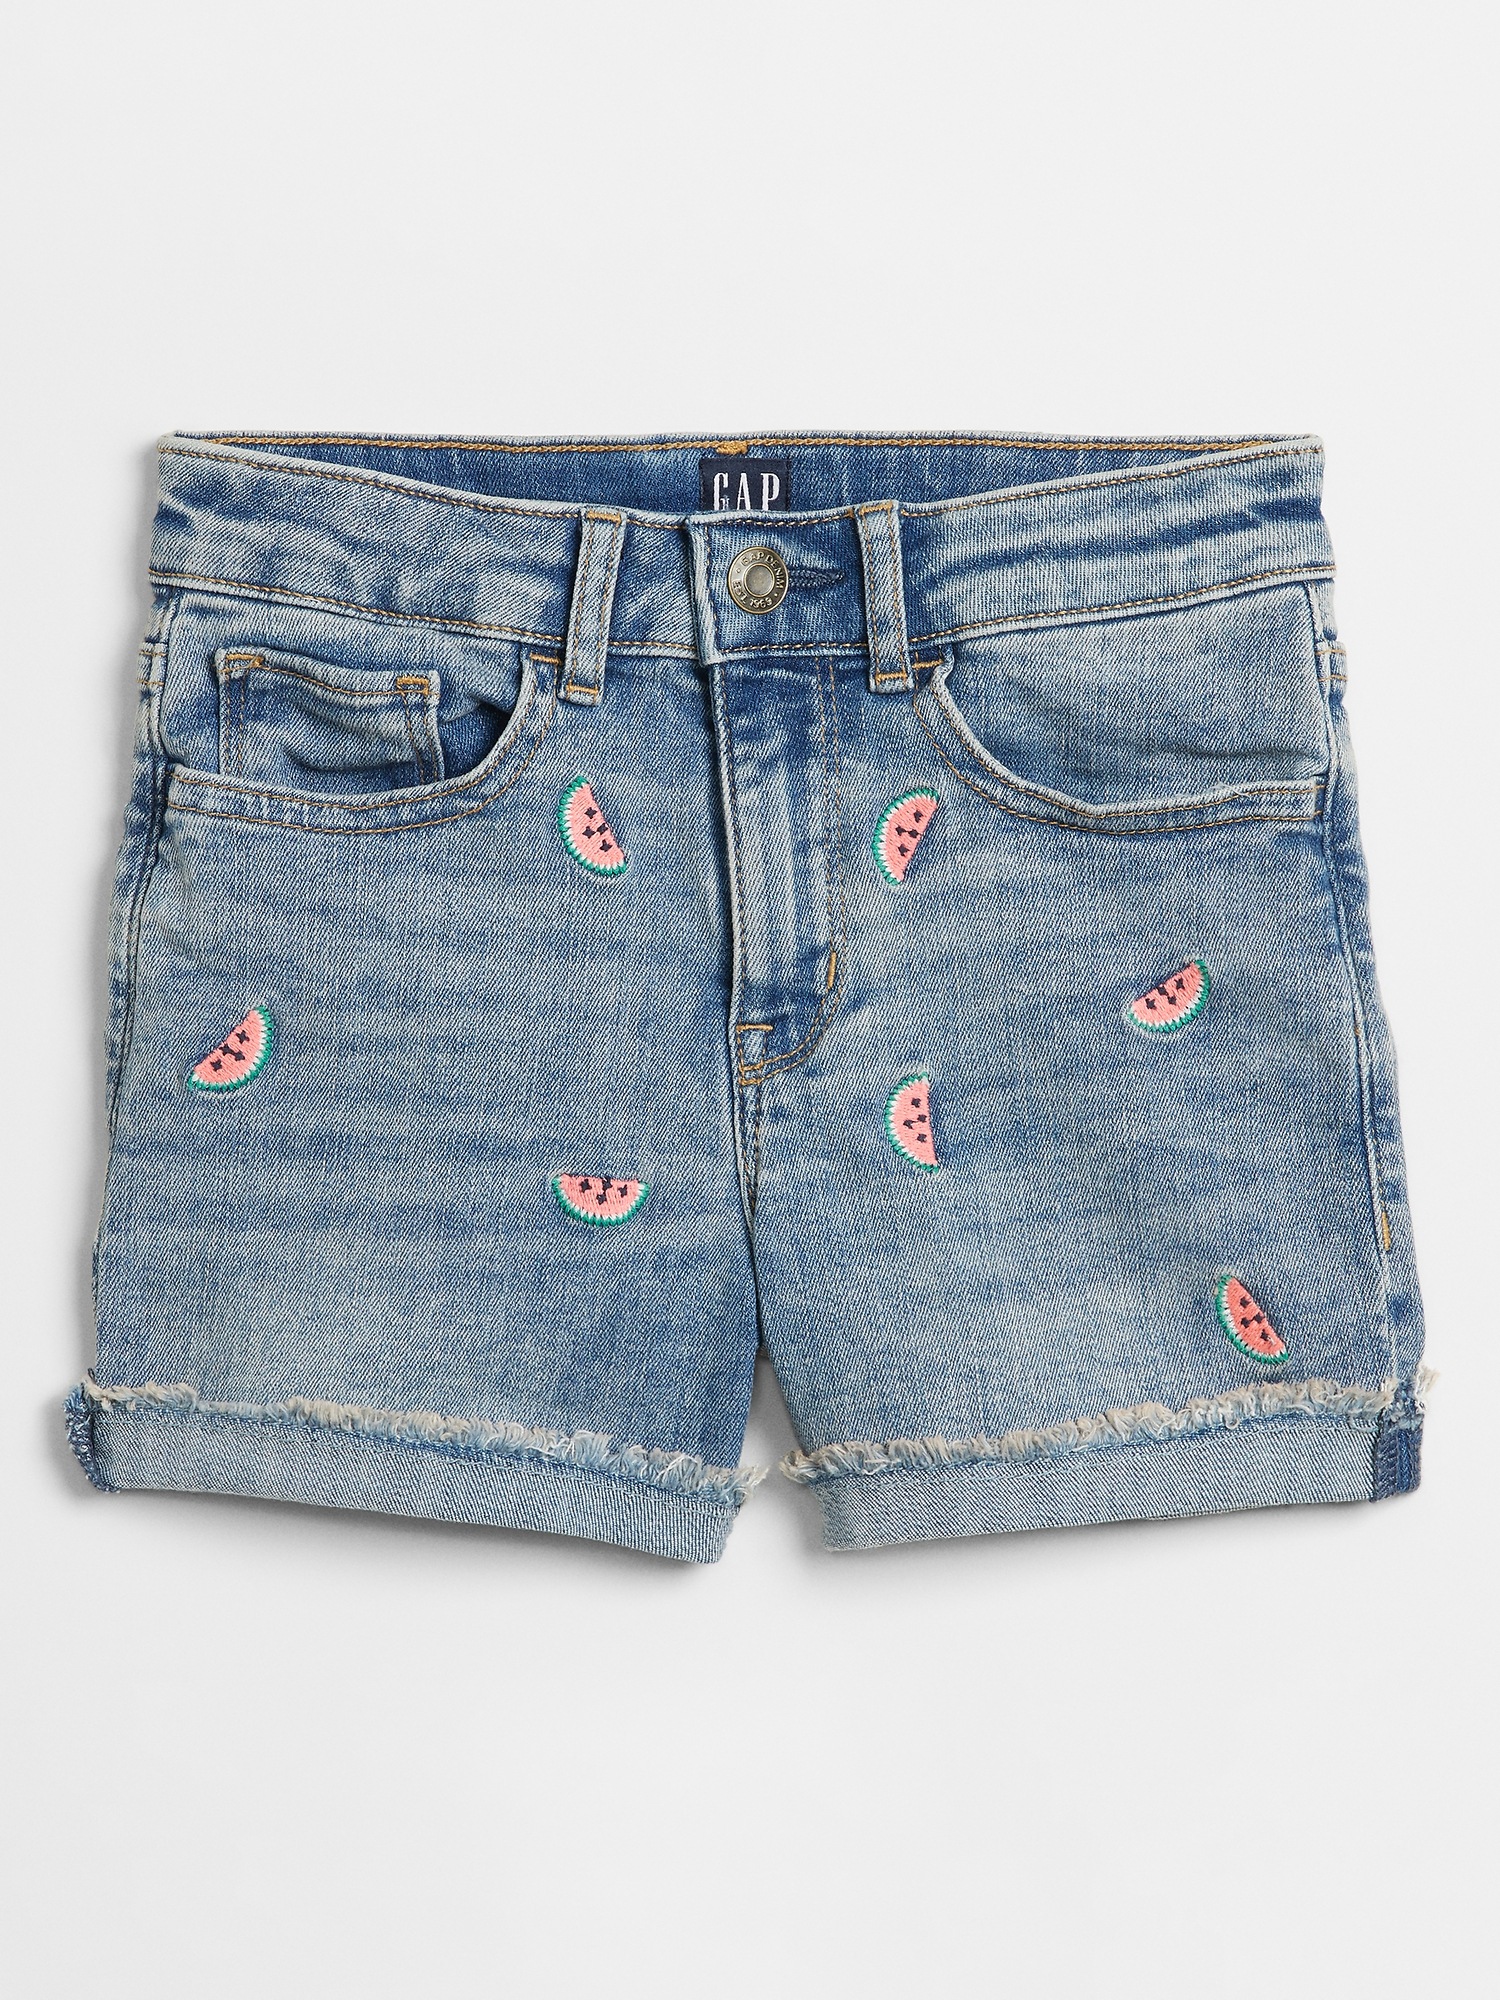 gap kids jean shorts